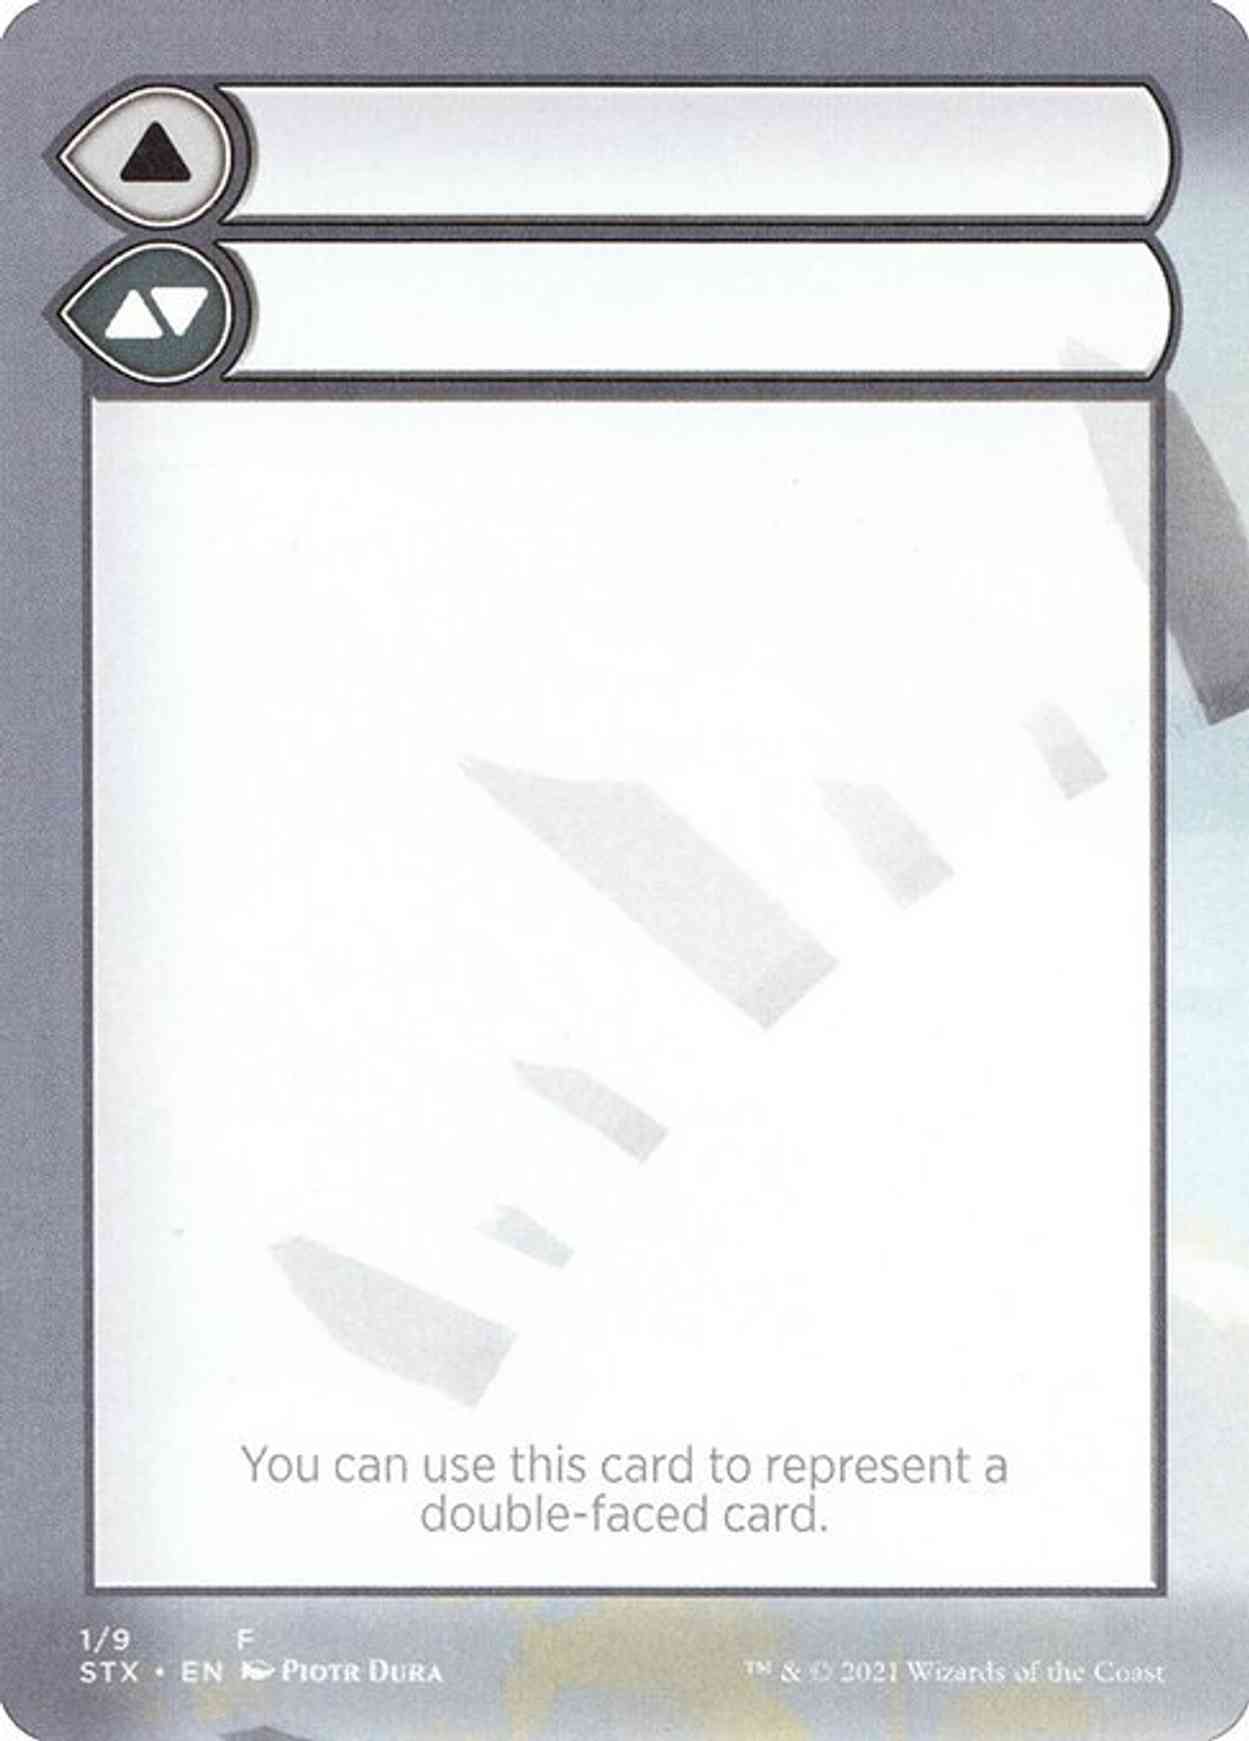 Helper Card (1/9) magic card front